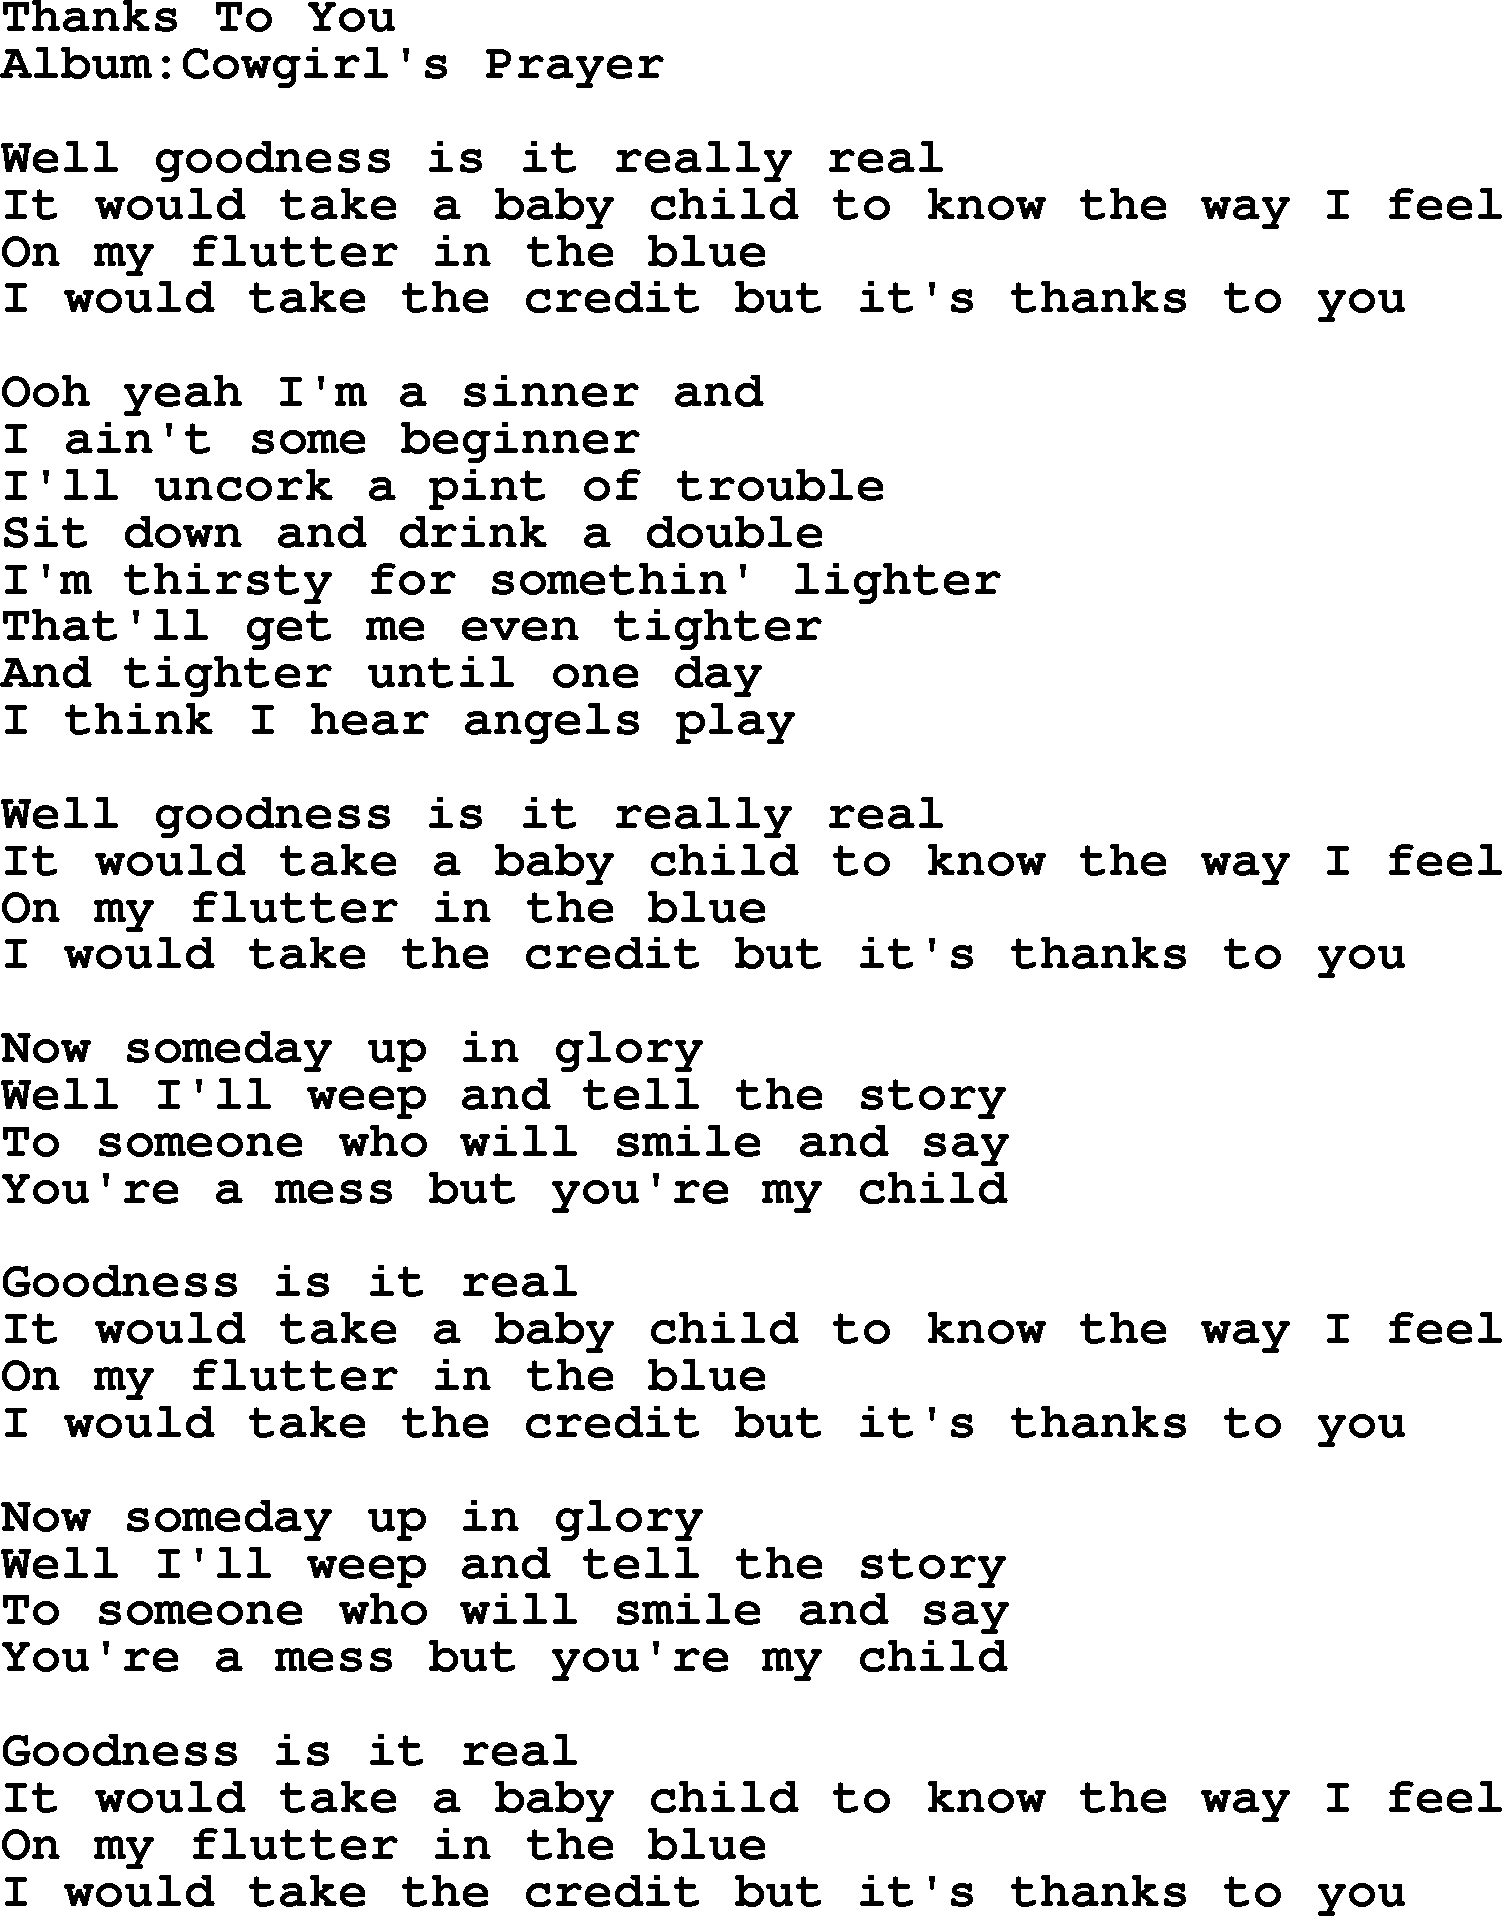 Emmylou Harris song: Thanks To You lyrics